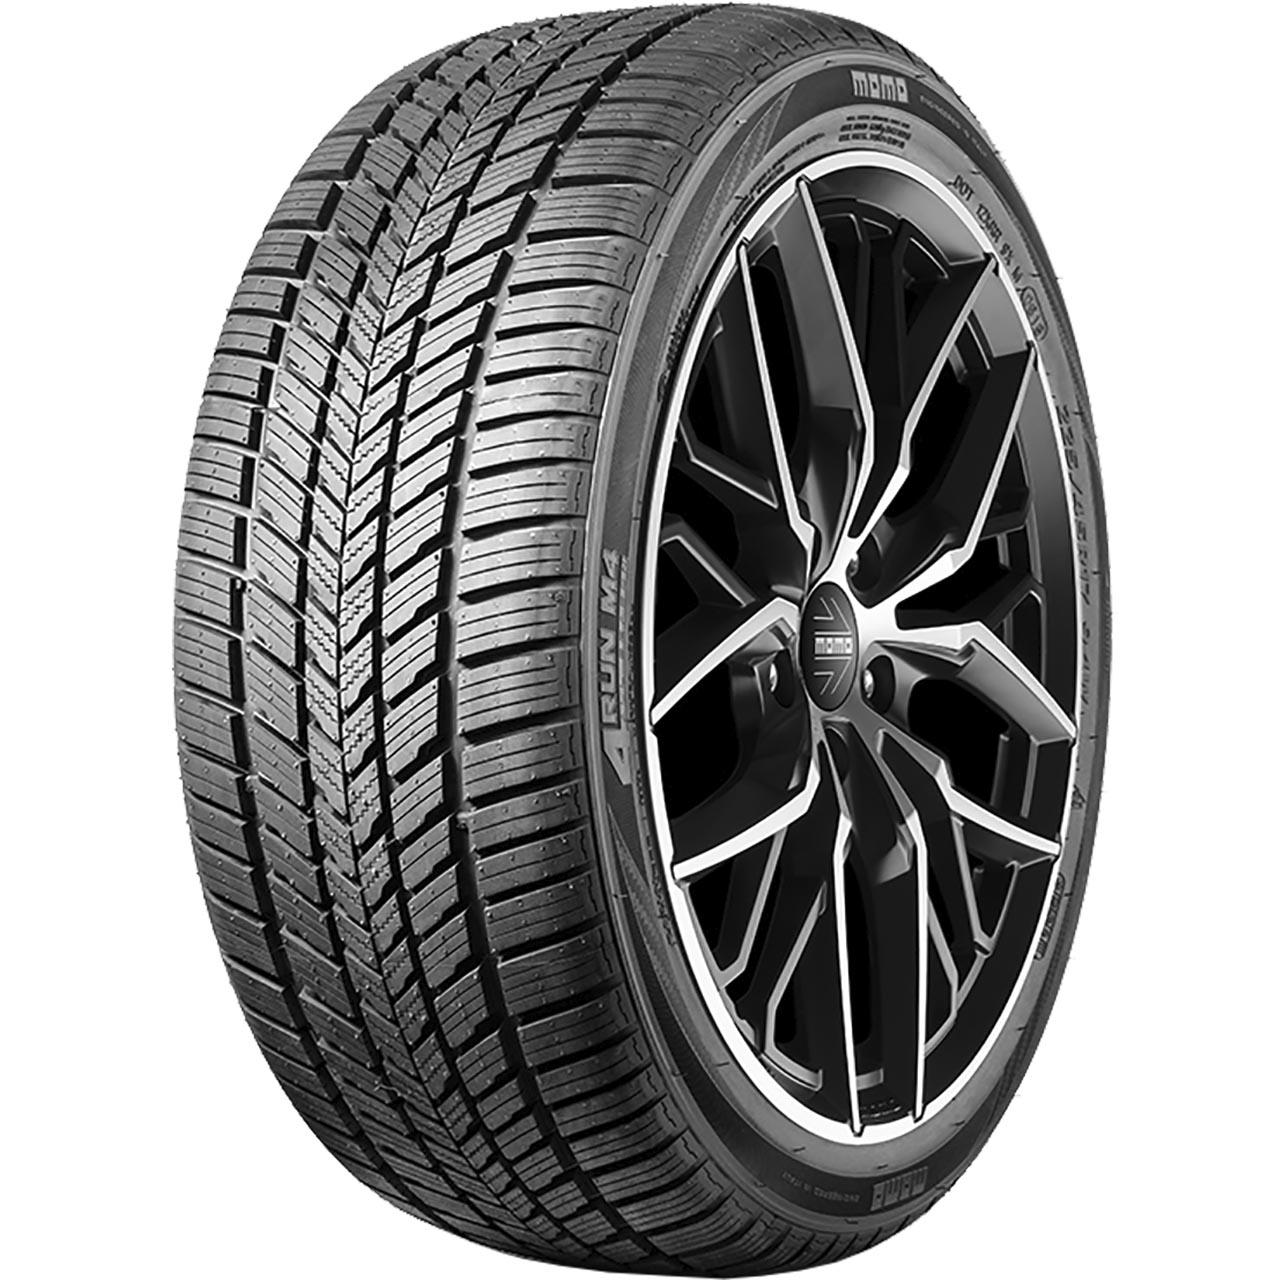 Momo Tire M 4 Four Season 175/65R15 88H XL